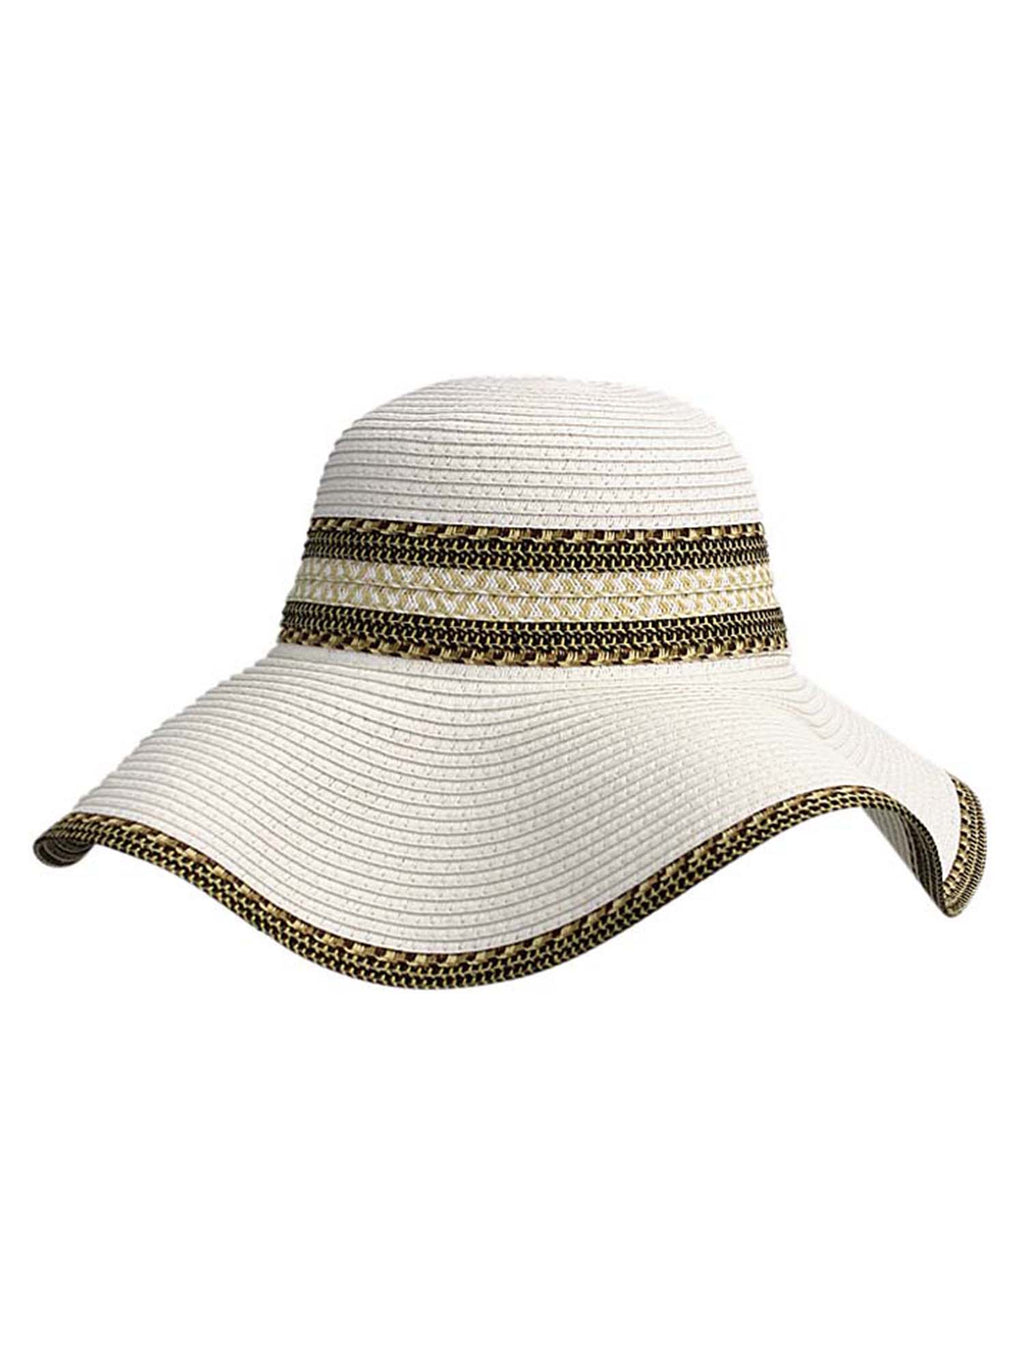 Woven Straw Bohemian Style Floppy Hat